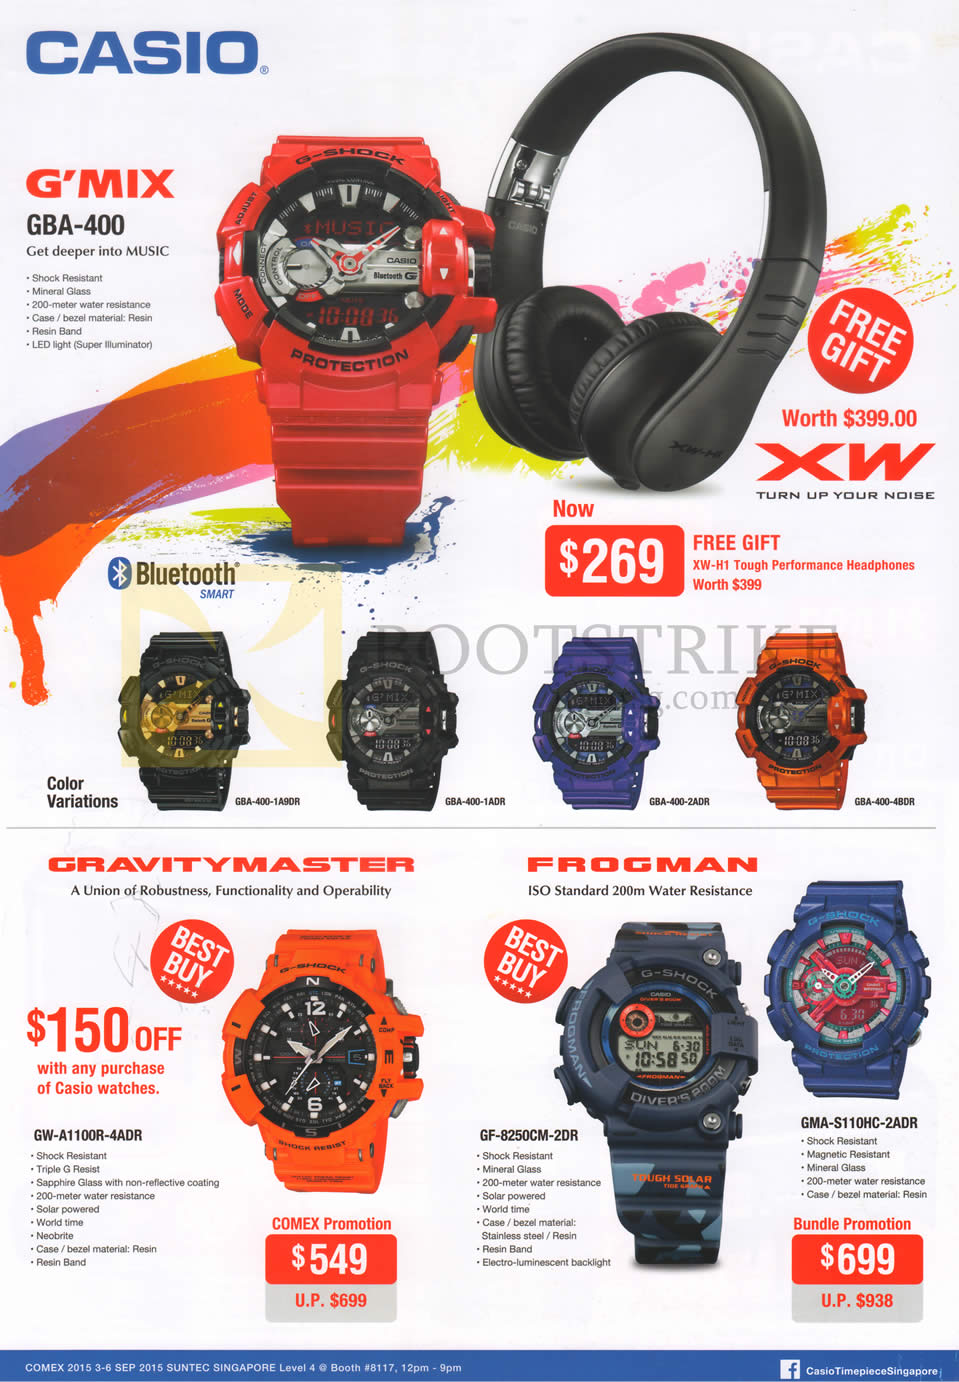 COMEX 2015 price list image brochure of Casio Watches XW Gmix, Gravitymaster, Frogman